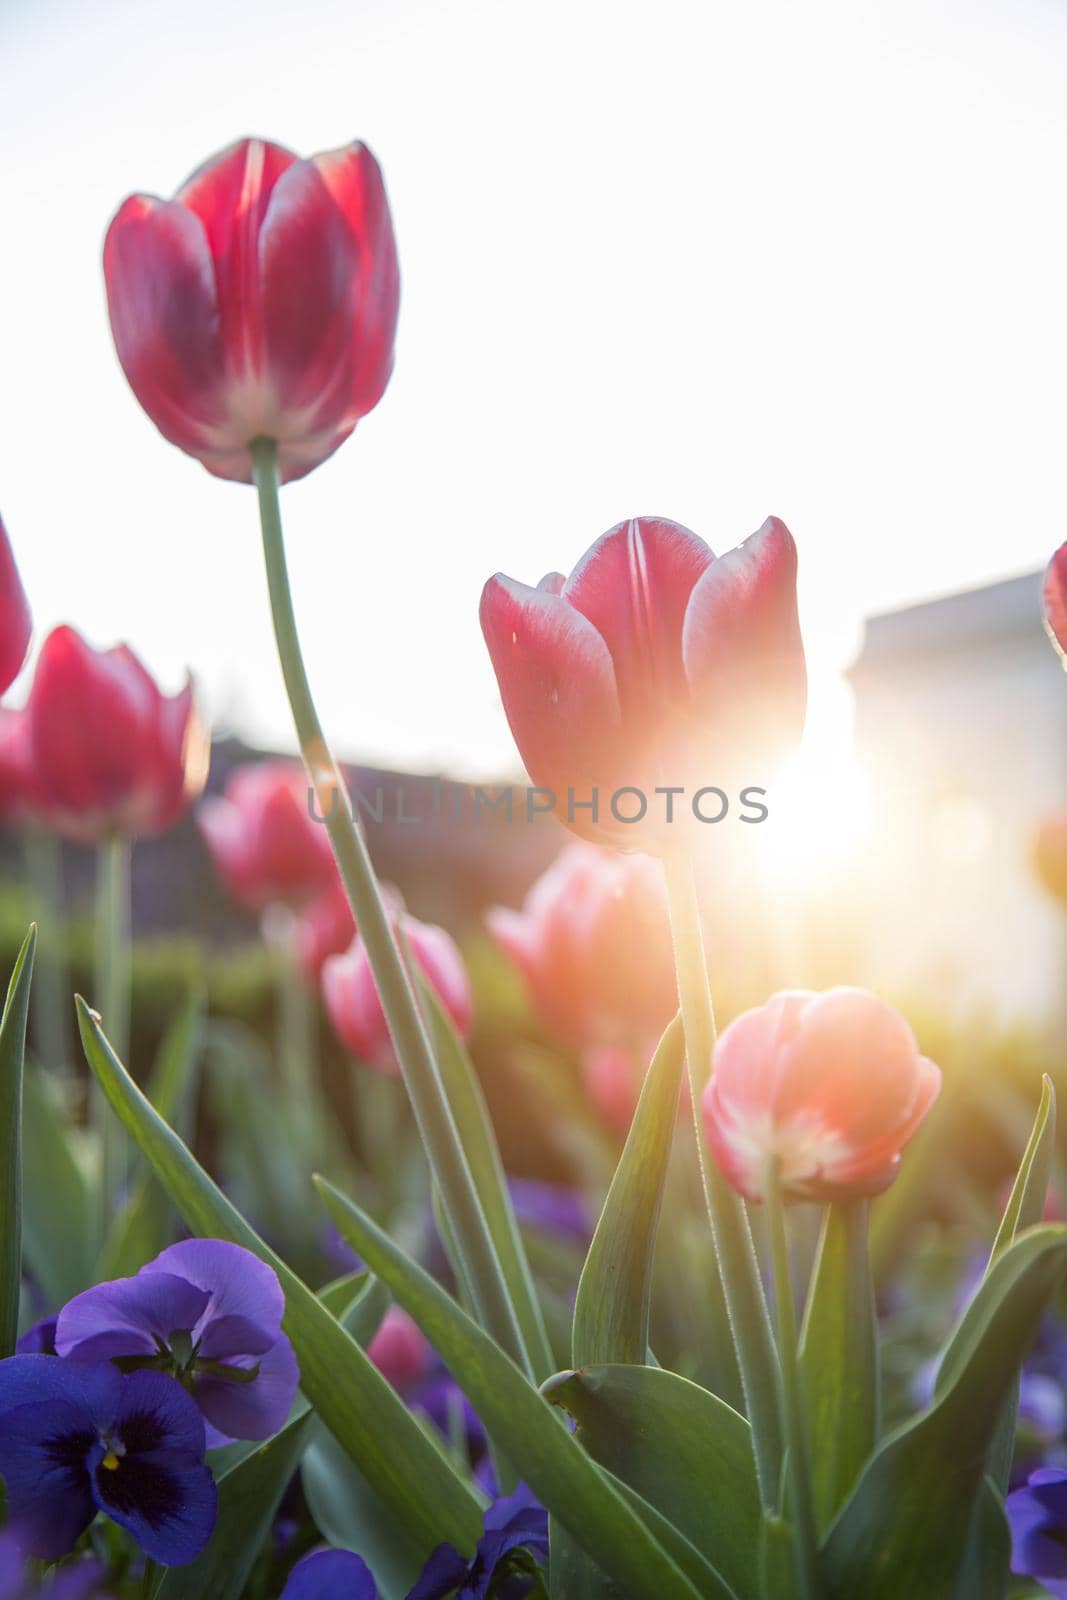 Arrangement of colorful spring flowers in the public park, springtime by Daxenbichler